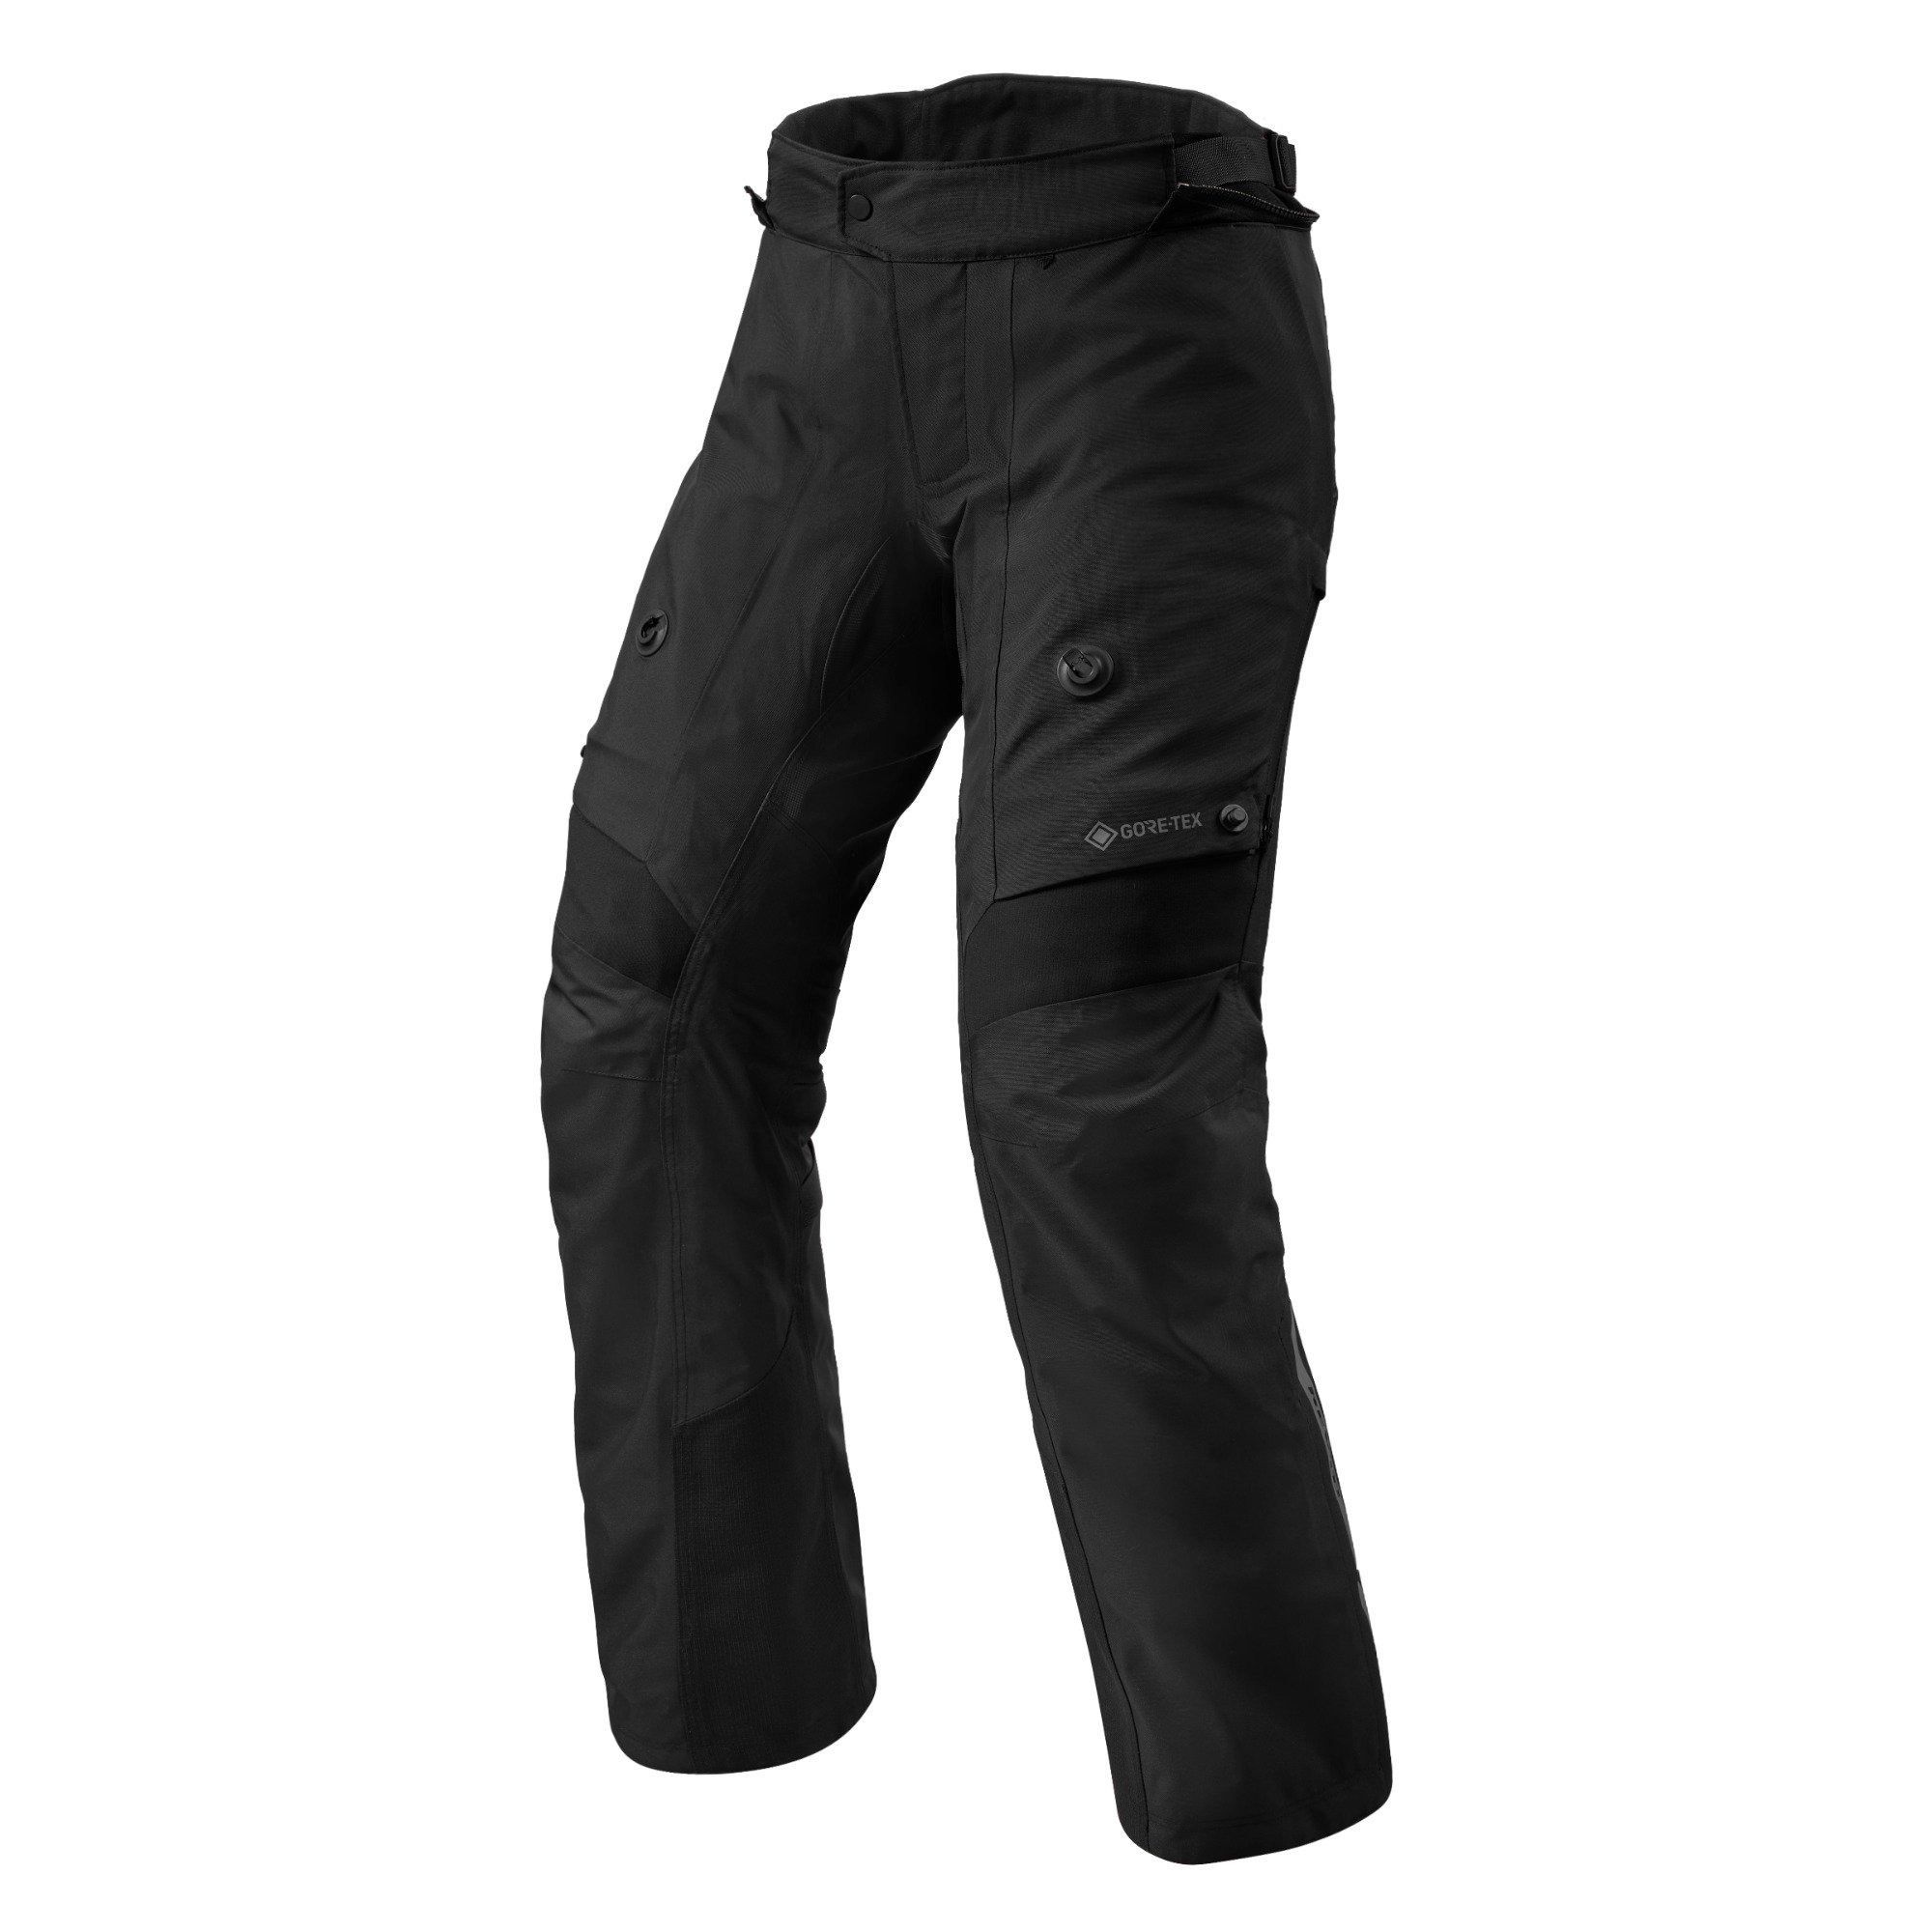 Image of REV'IT! Pants Poseidon 3 GTX Black Standard Motorcycle Pants Size M EN